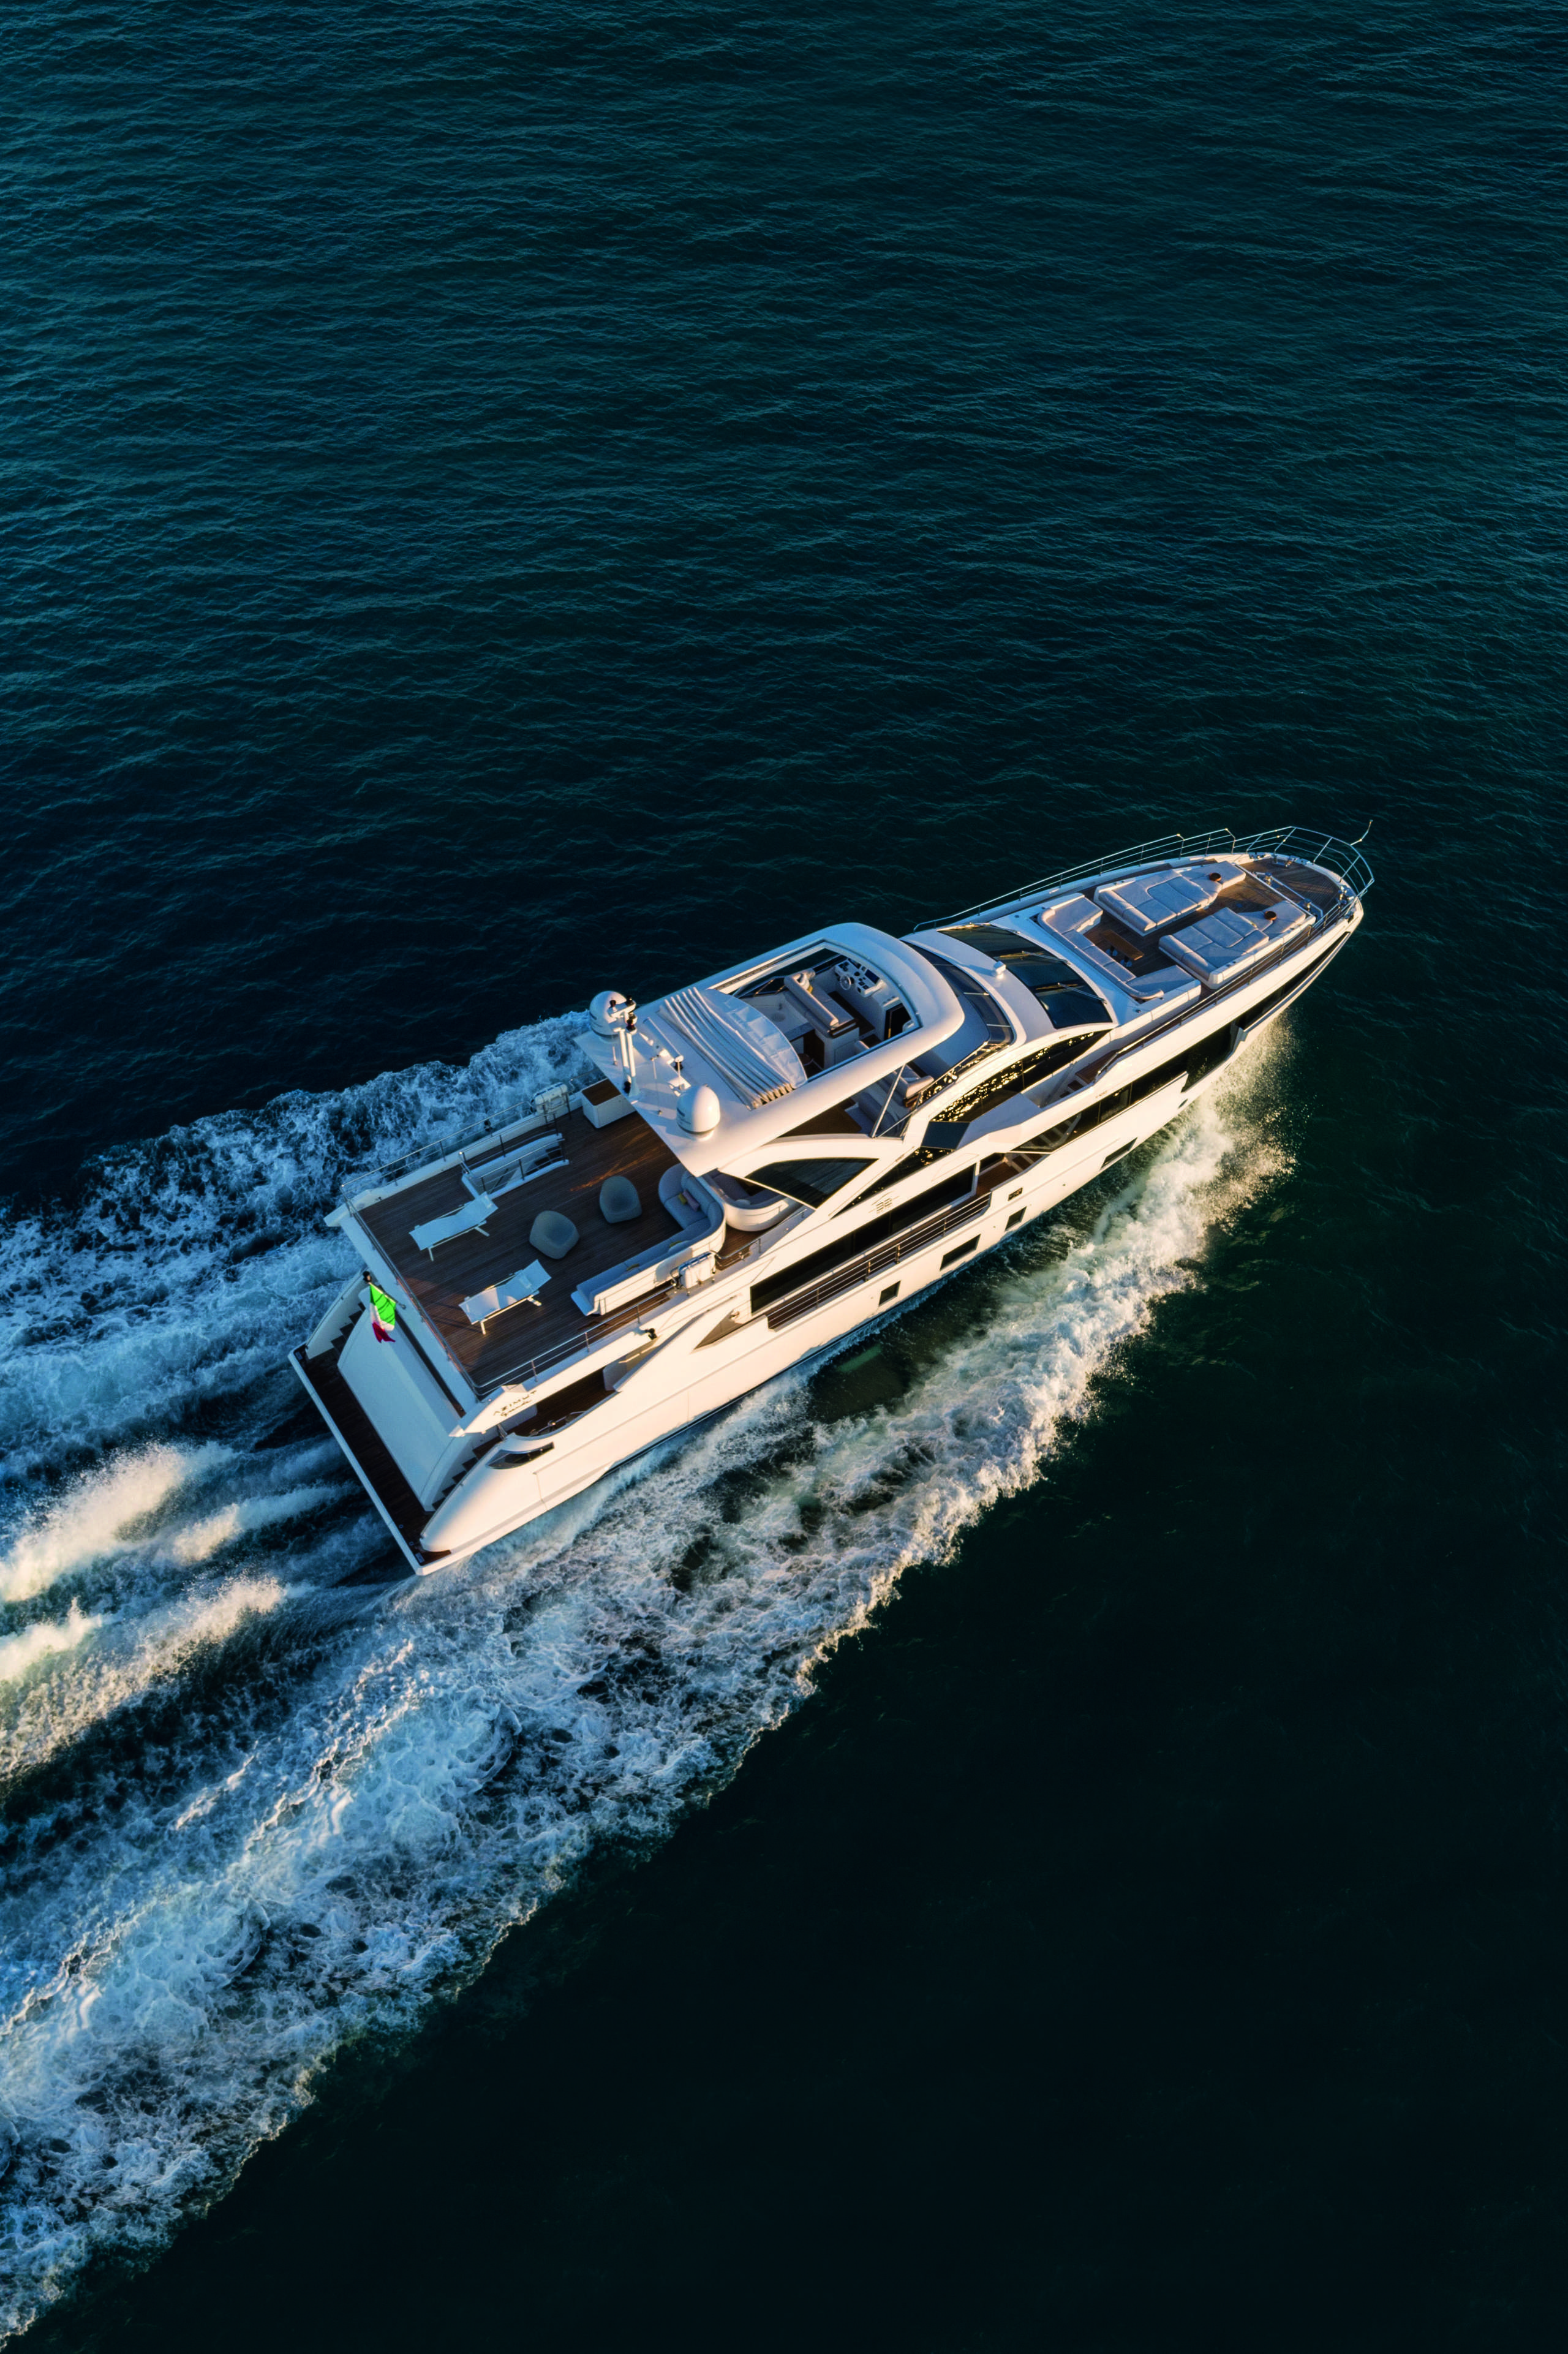 azimut yacht 32 metri for sale